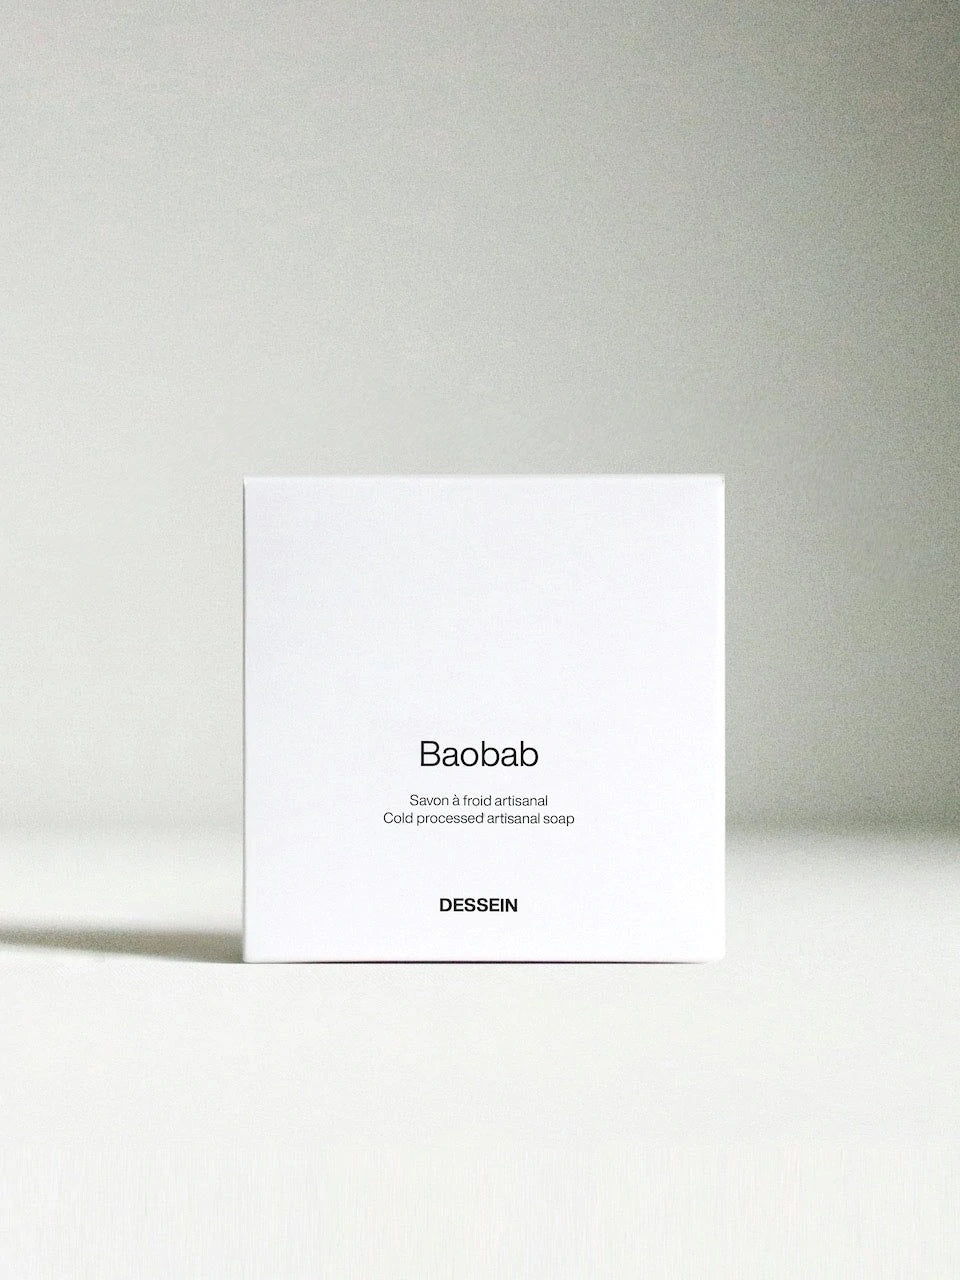 baobab-dessein-cold-processed-artisanal-soap-01